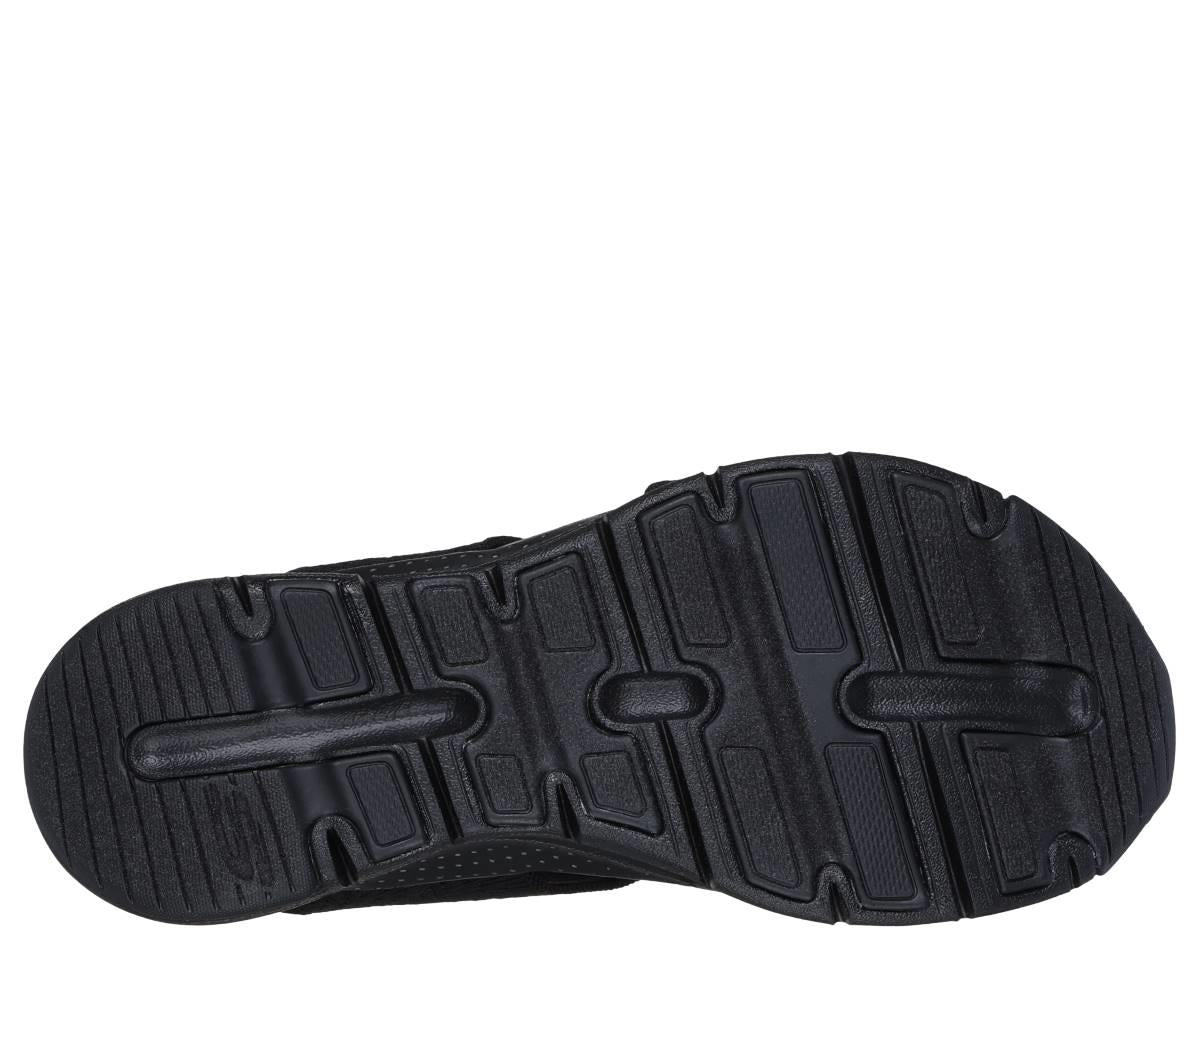 Skechers Womens Arch Fit Sandals Black Brightest Day 119458/BBK